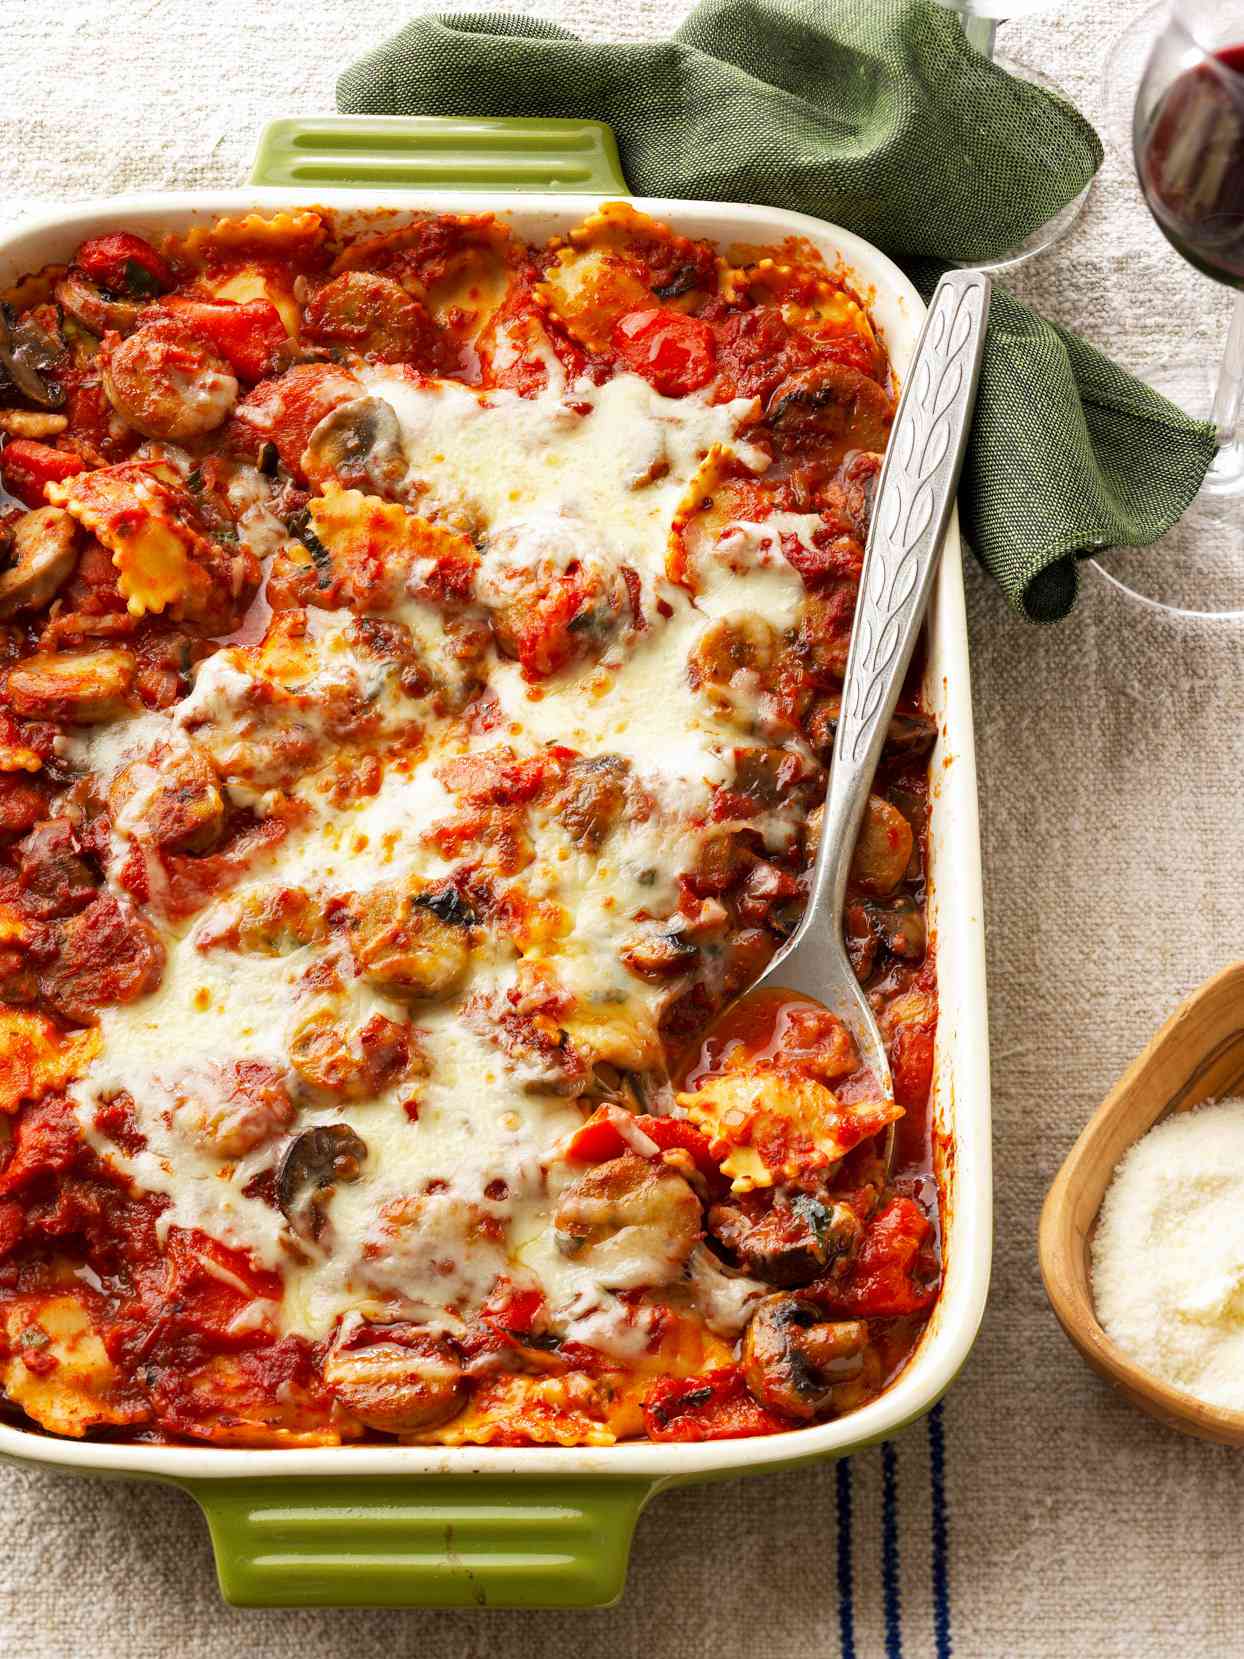 Weeknight Ravioli Lasagna with Chianti Sauce